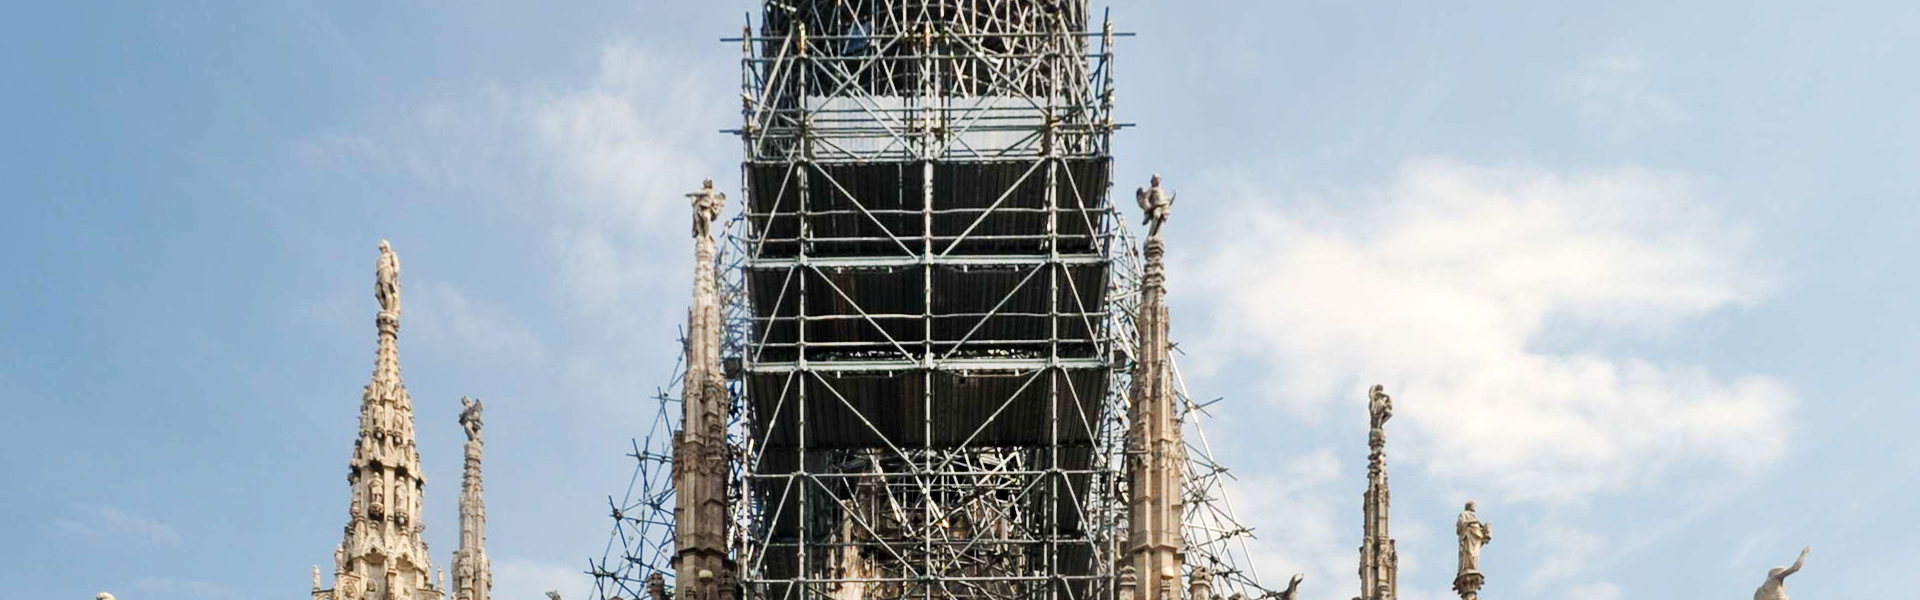 Milan Cathedral Spire 1 1920 600